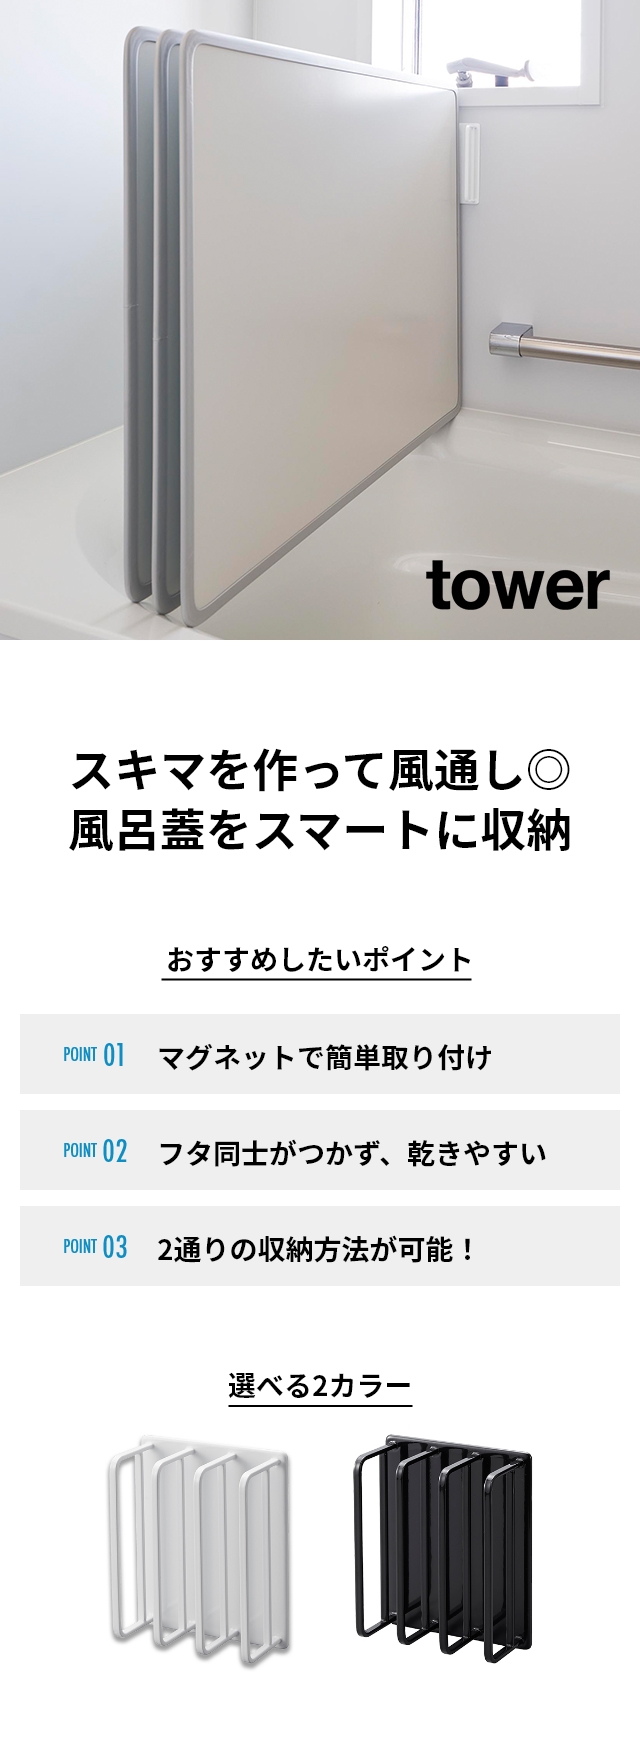 tower(タワー) マグネットバスルーム風呂蓋ドライハンガー